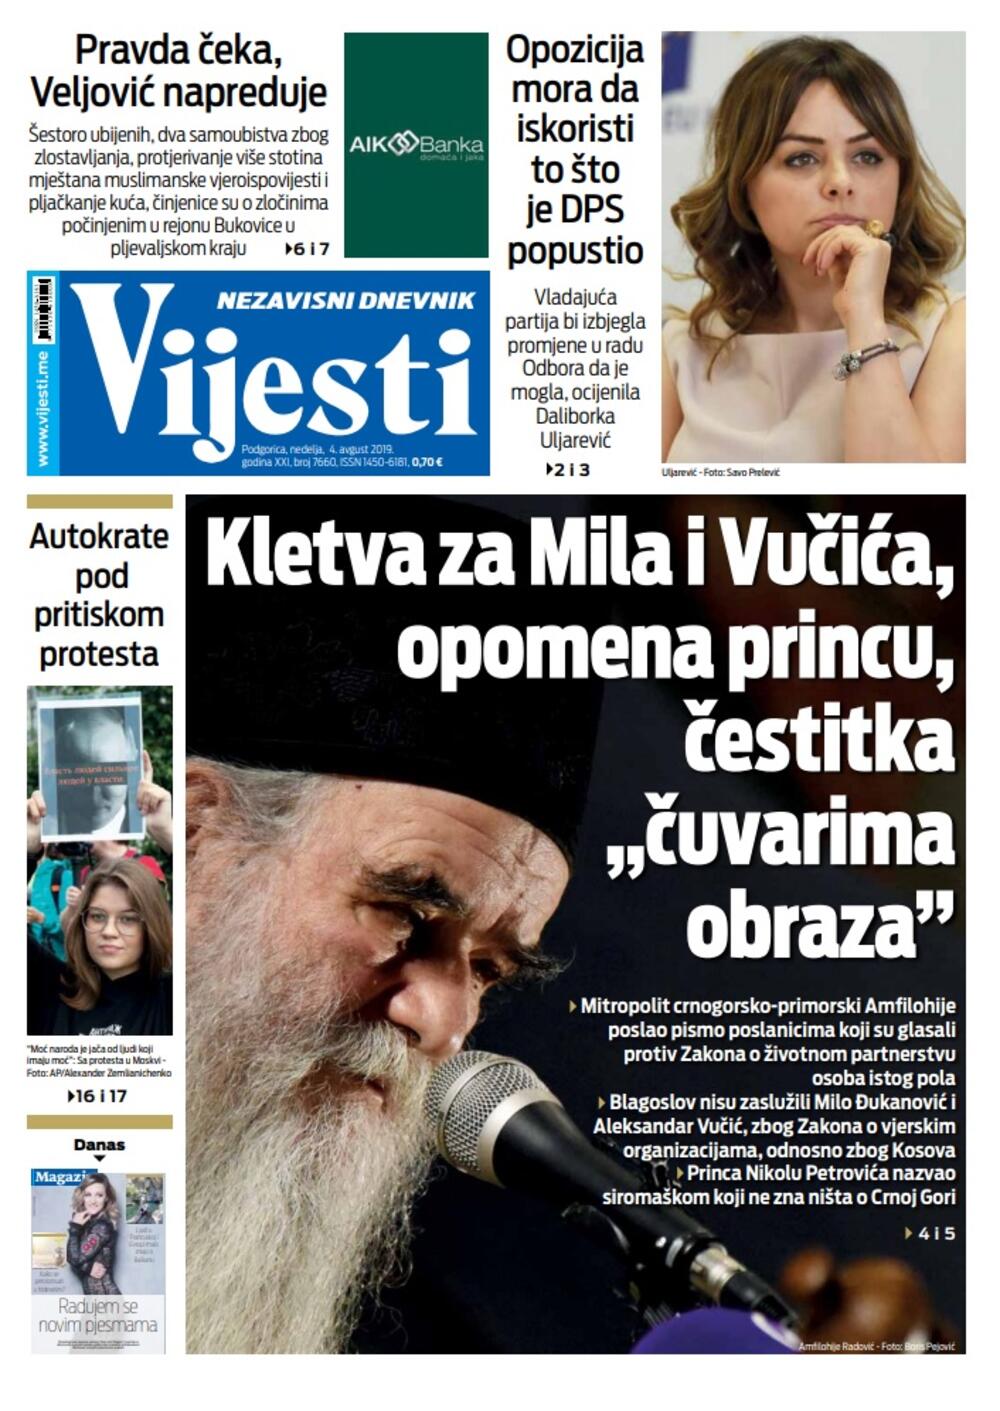 Naslovna strana za "Vijesti" za 4. avgust